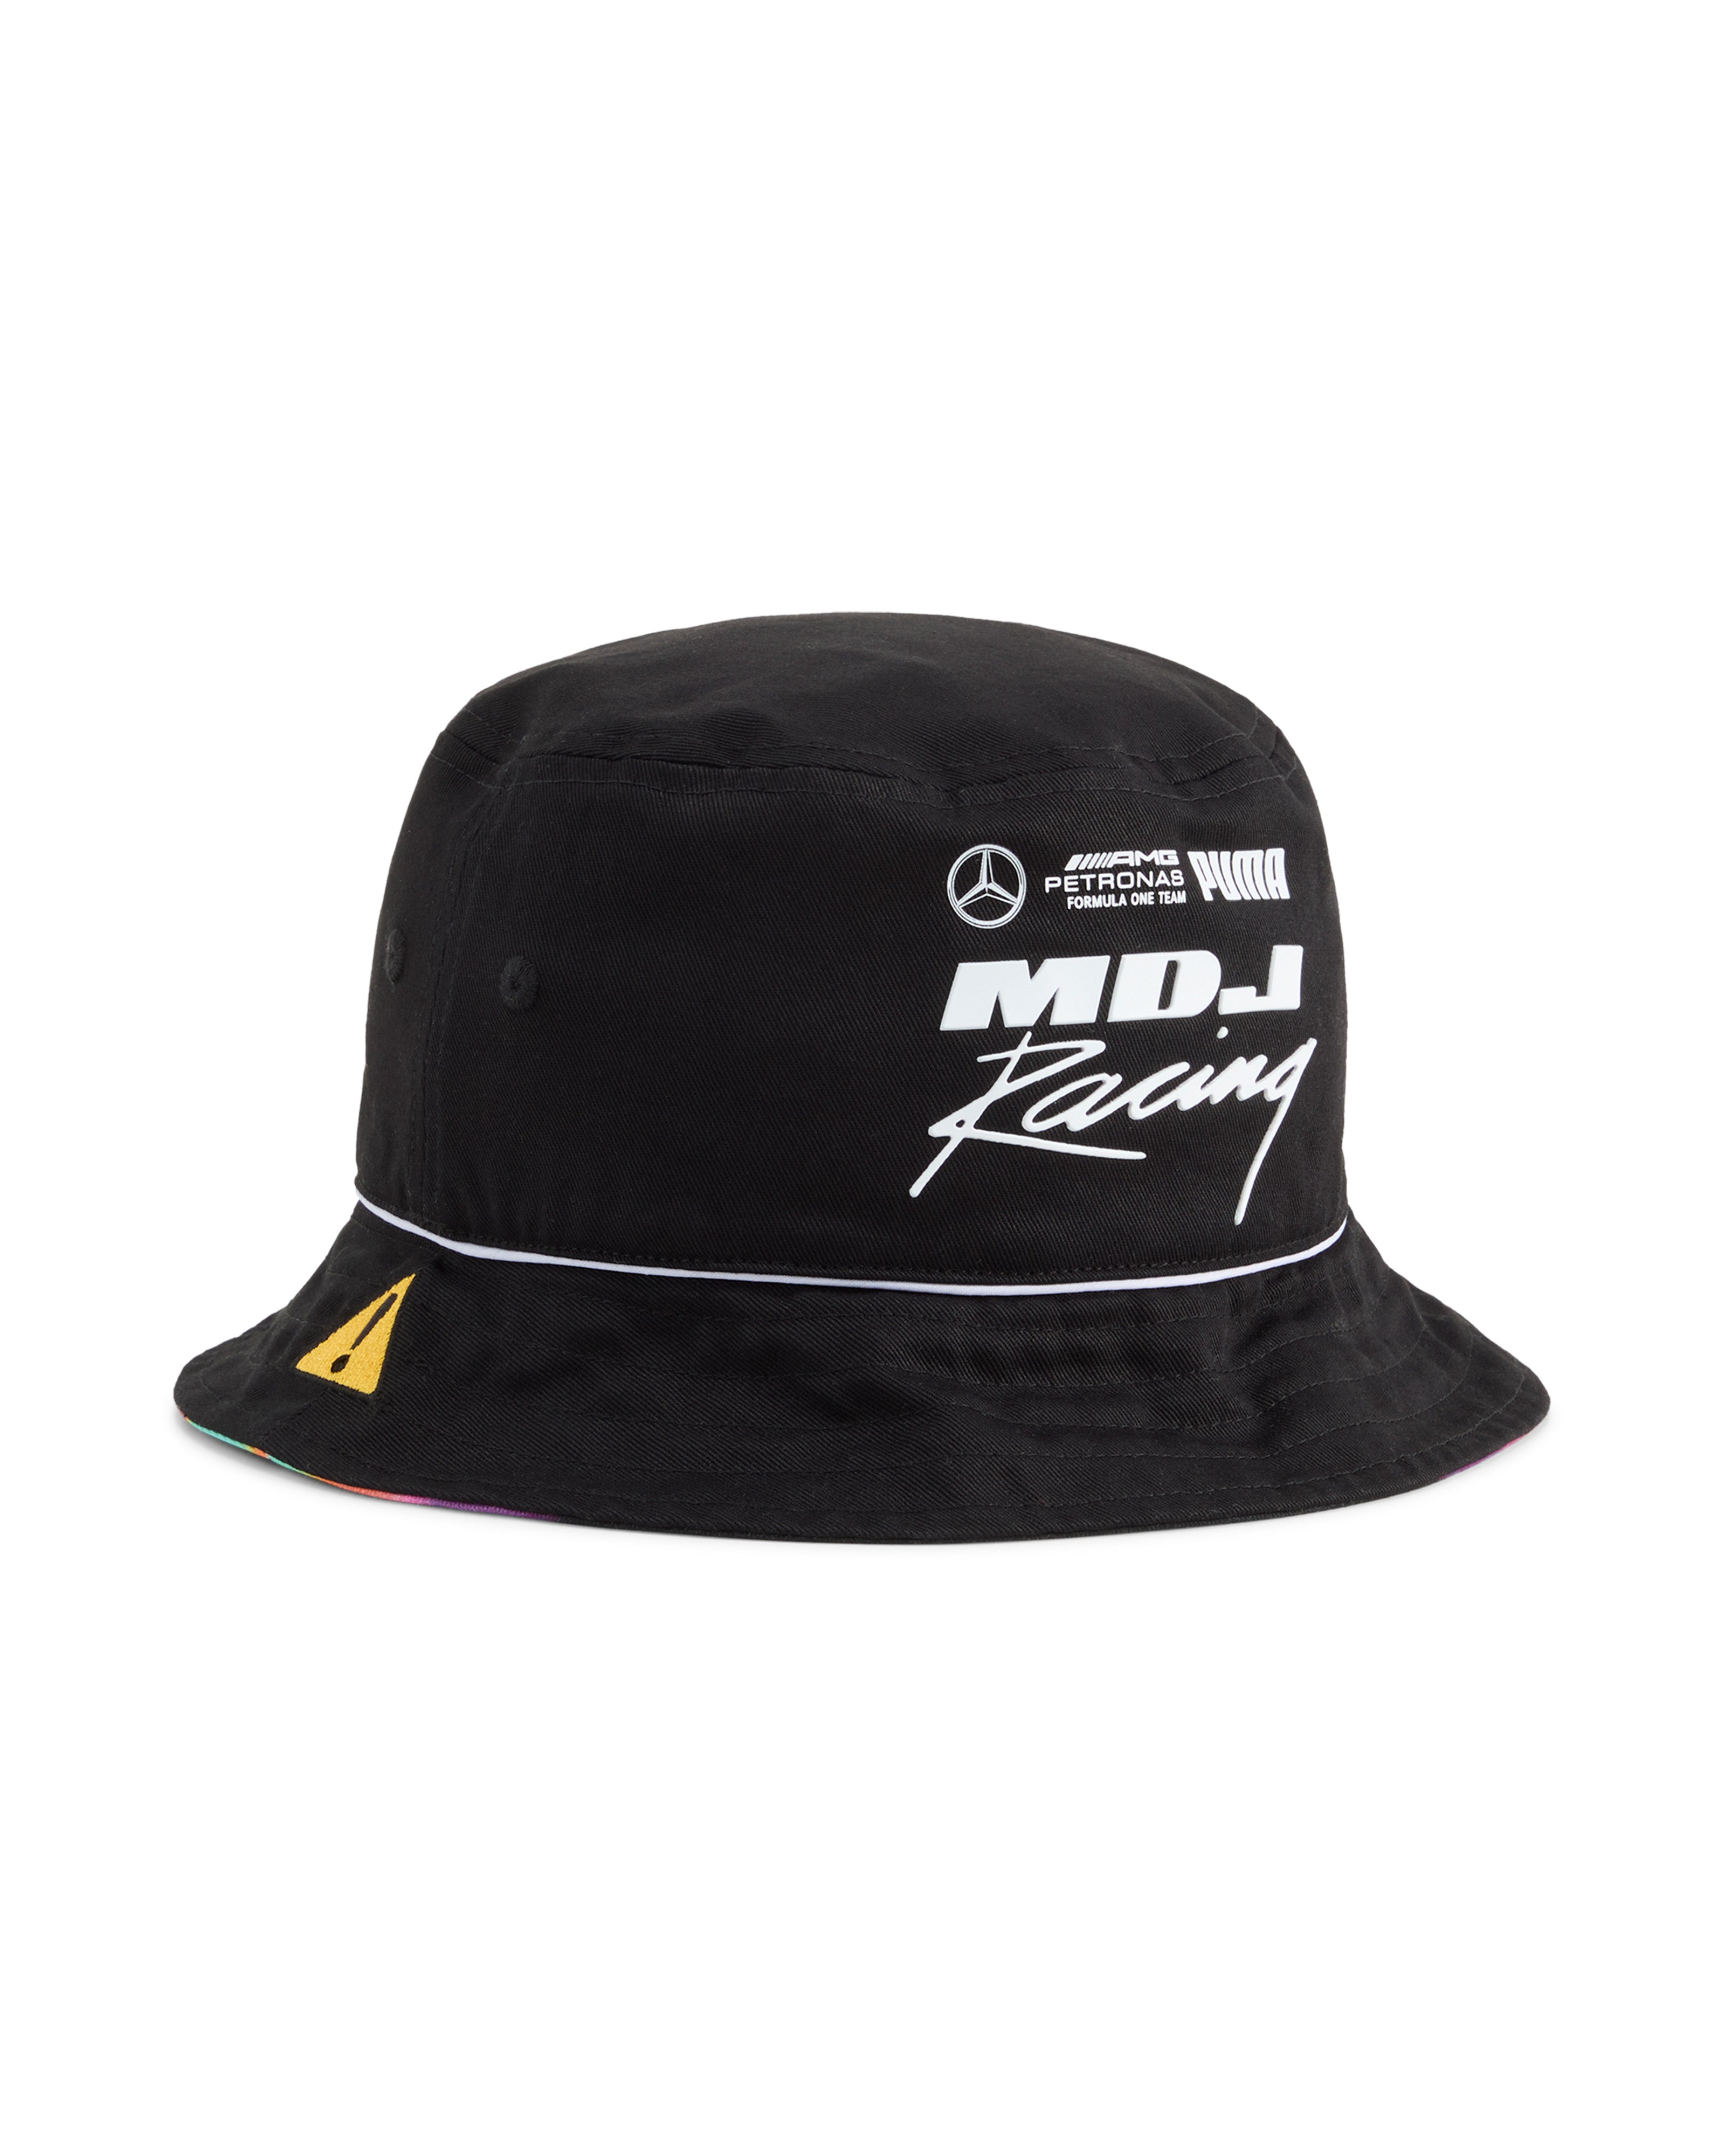 Mad Dog Jones x Mercedes-AMG F1 x PUMA Bucket Hat